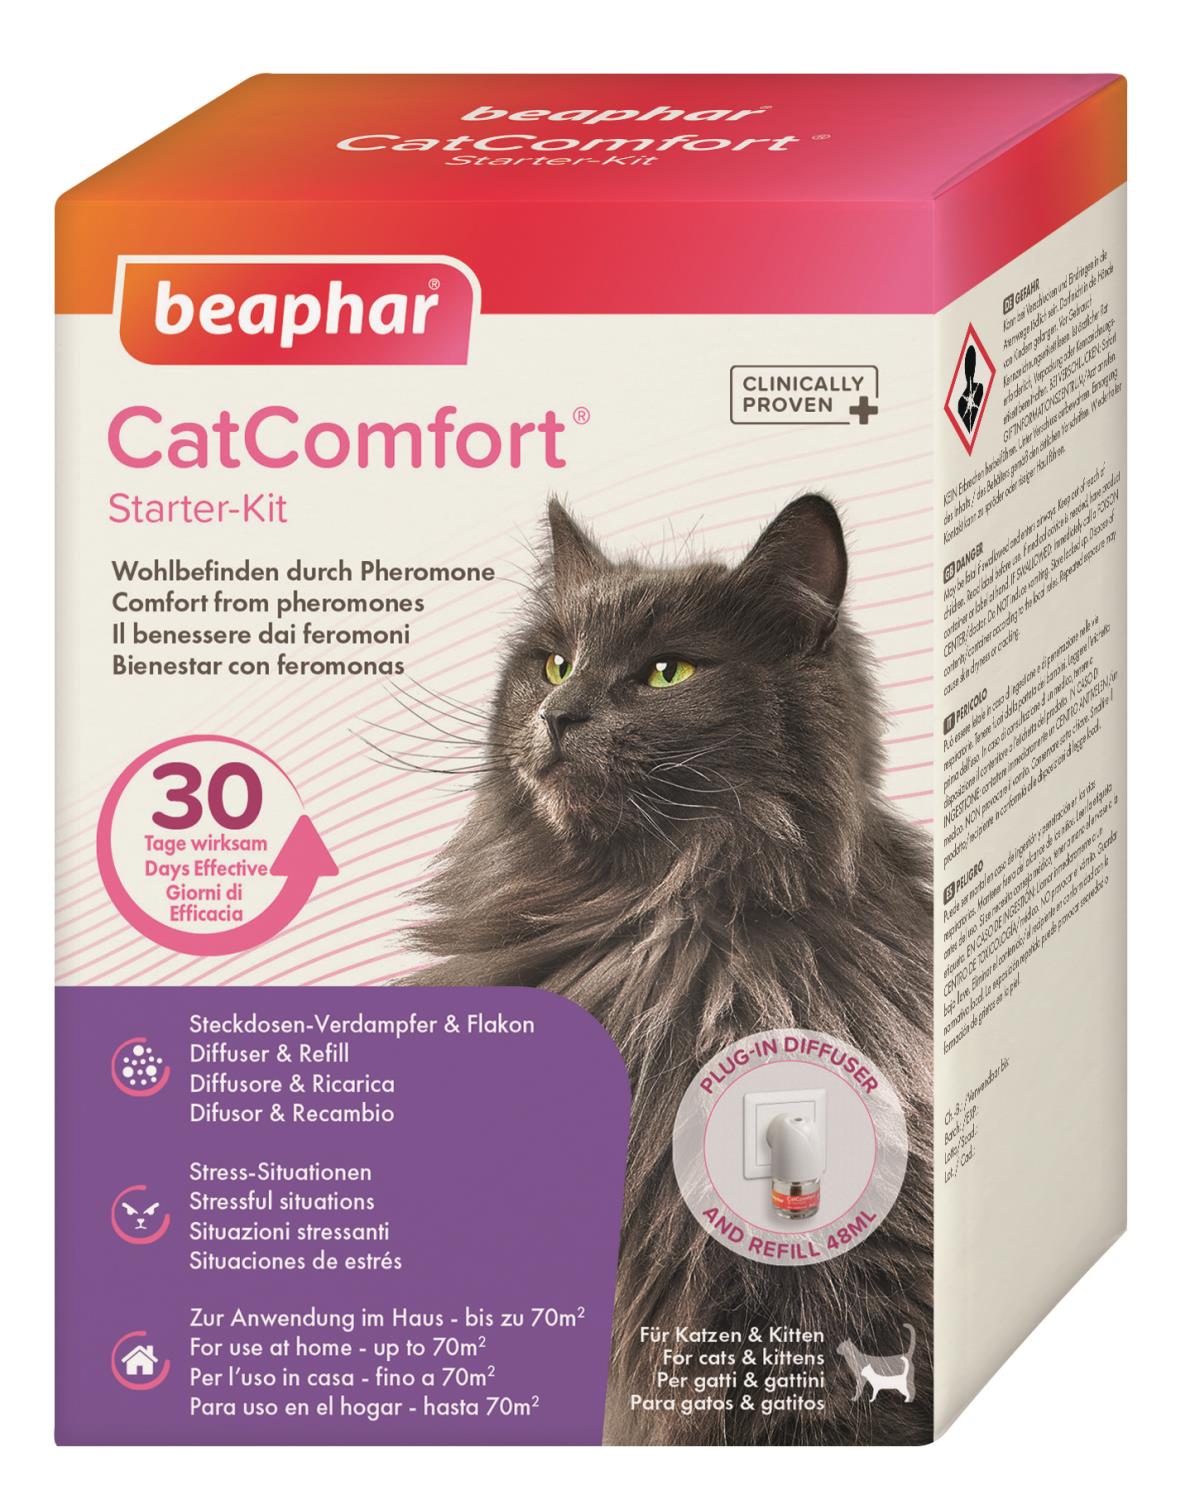 Catcomfort diffuser sett katt